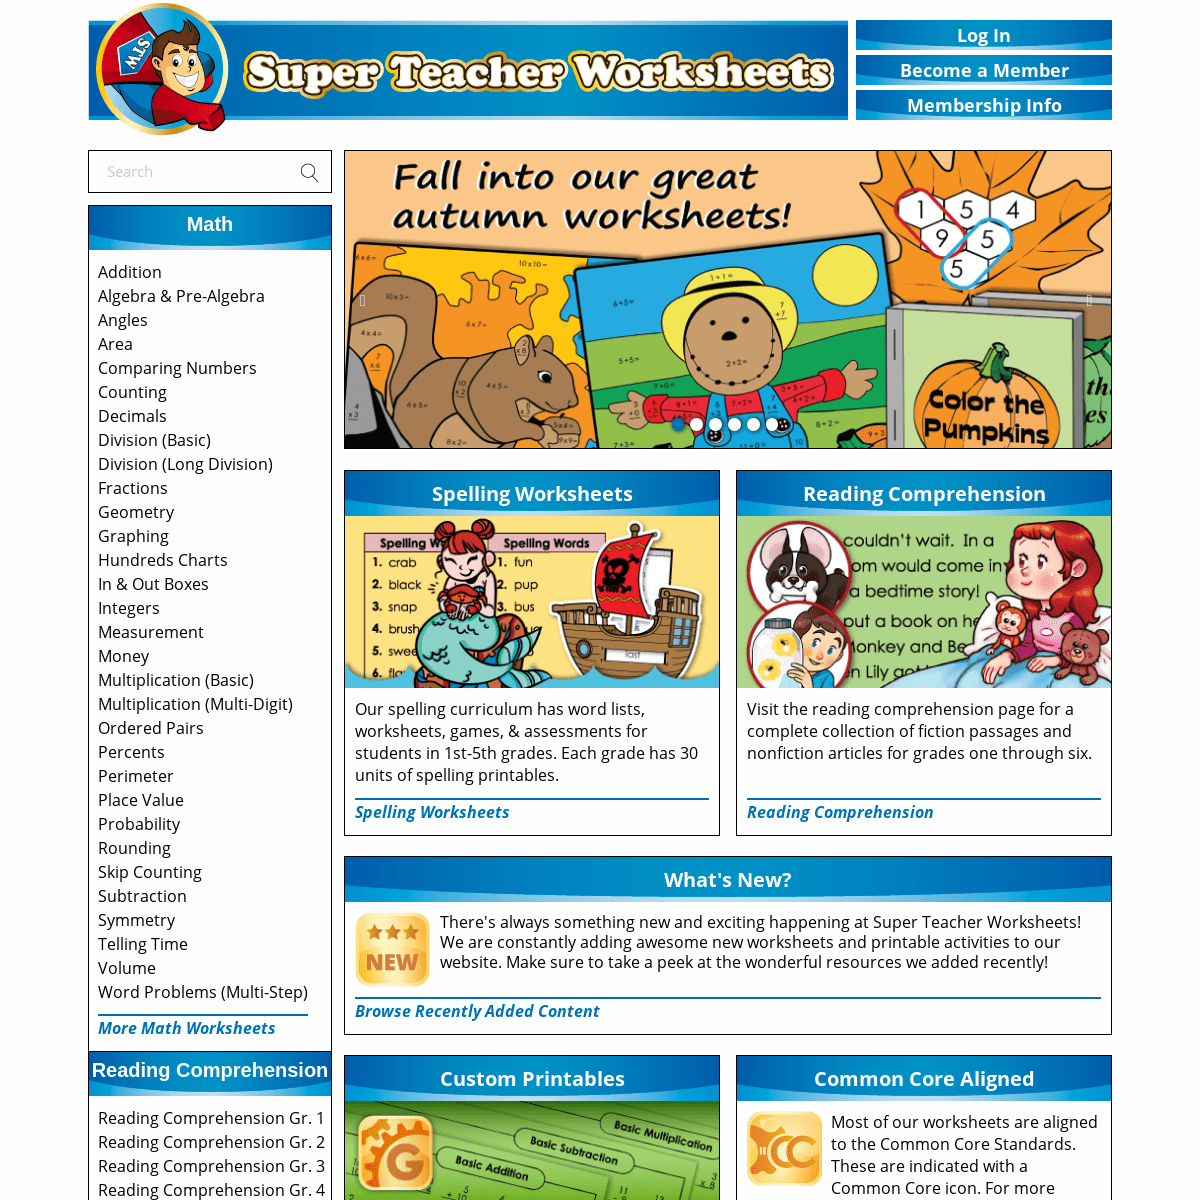 Super Teacher Worksheets - Thousands of Printable Activities